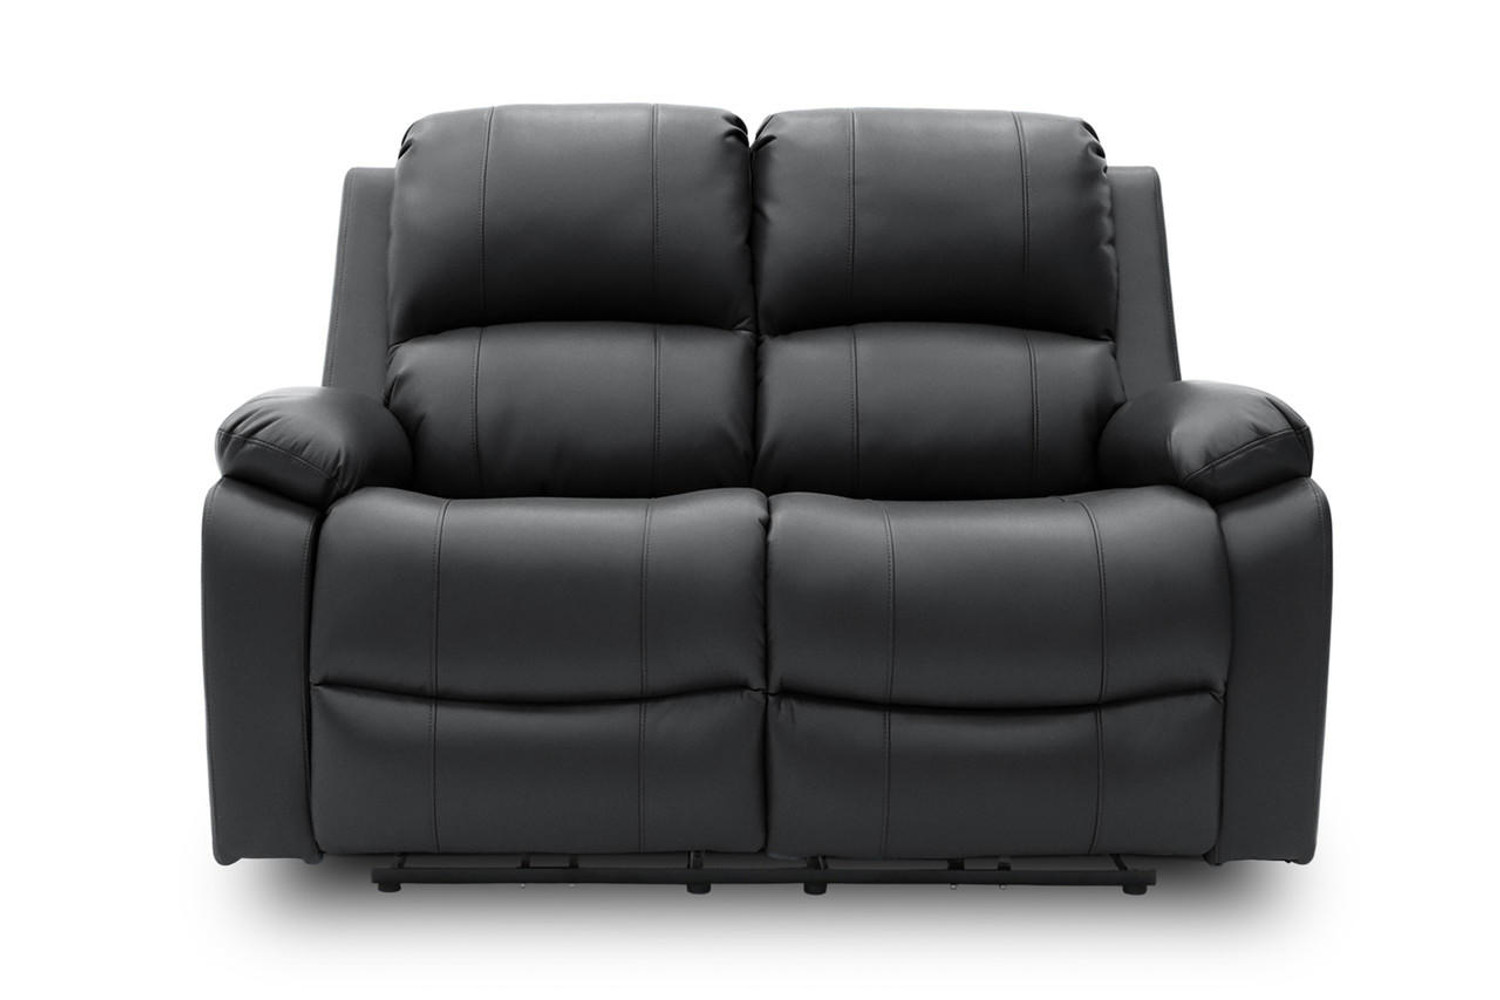 Honeypot Furniture Axel Electric Recliner Sofa Black 2 Seater 